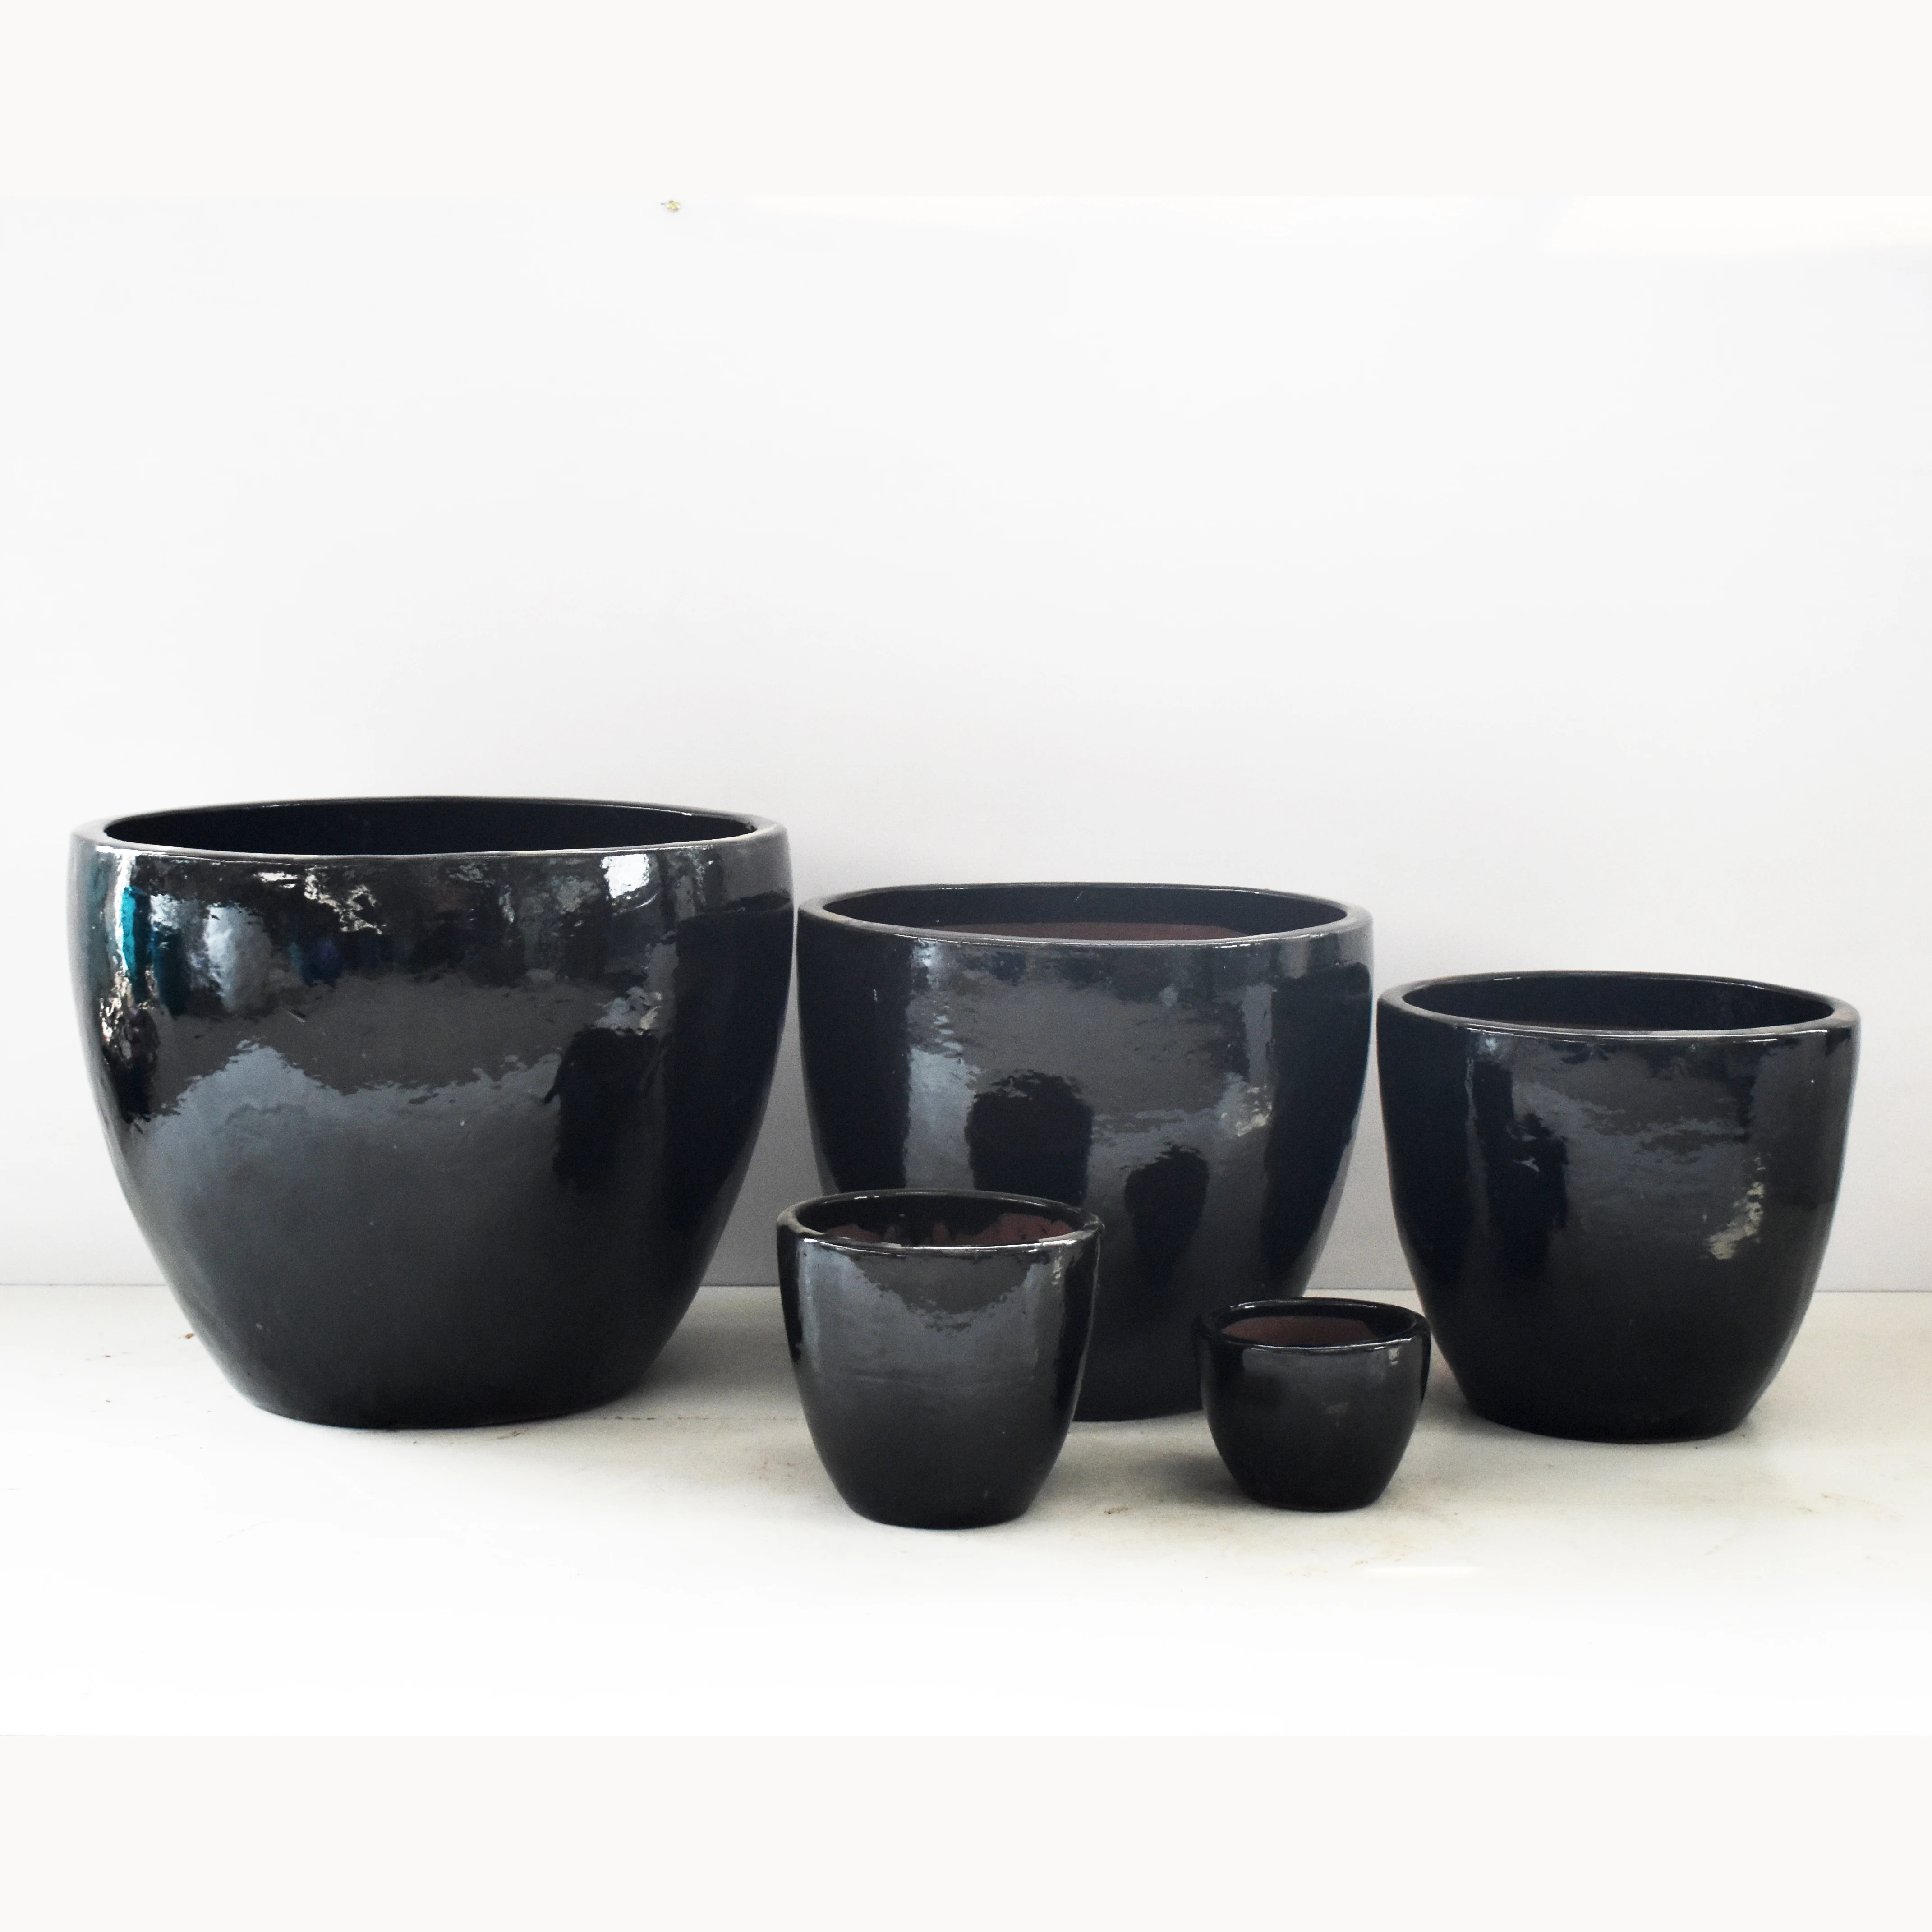 Wholesale Outdoor Glazed Ceramic Flower Pots Planters Clay Planters for Home Garden Design Floor Usage Outdoor Pottery Vase